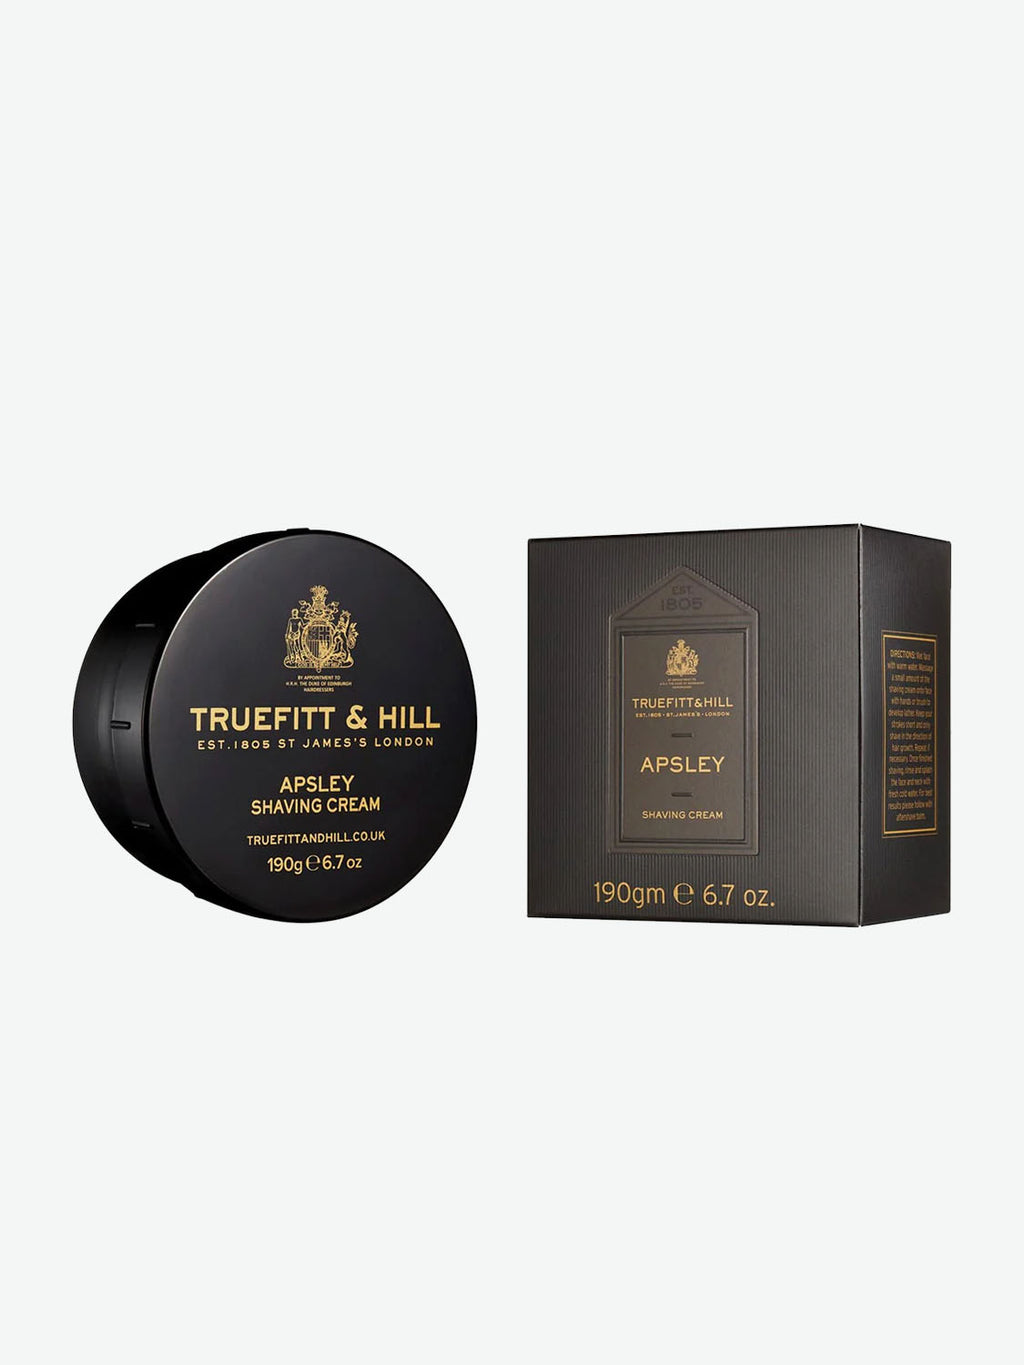 Truefitt And Hill Apsley Shaving Cream Bowl